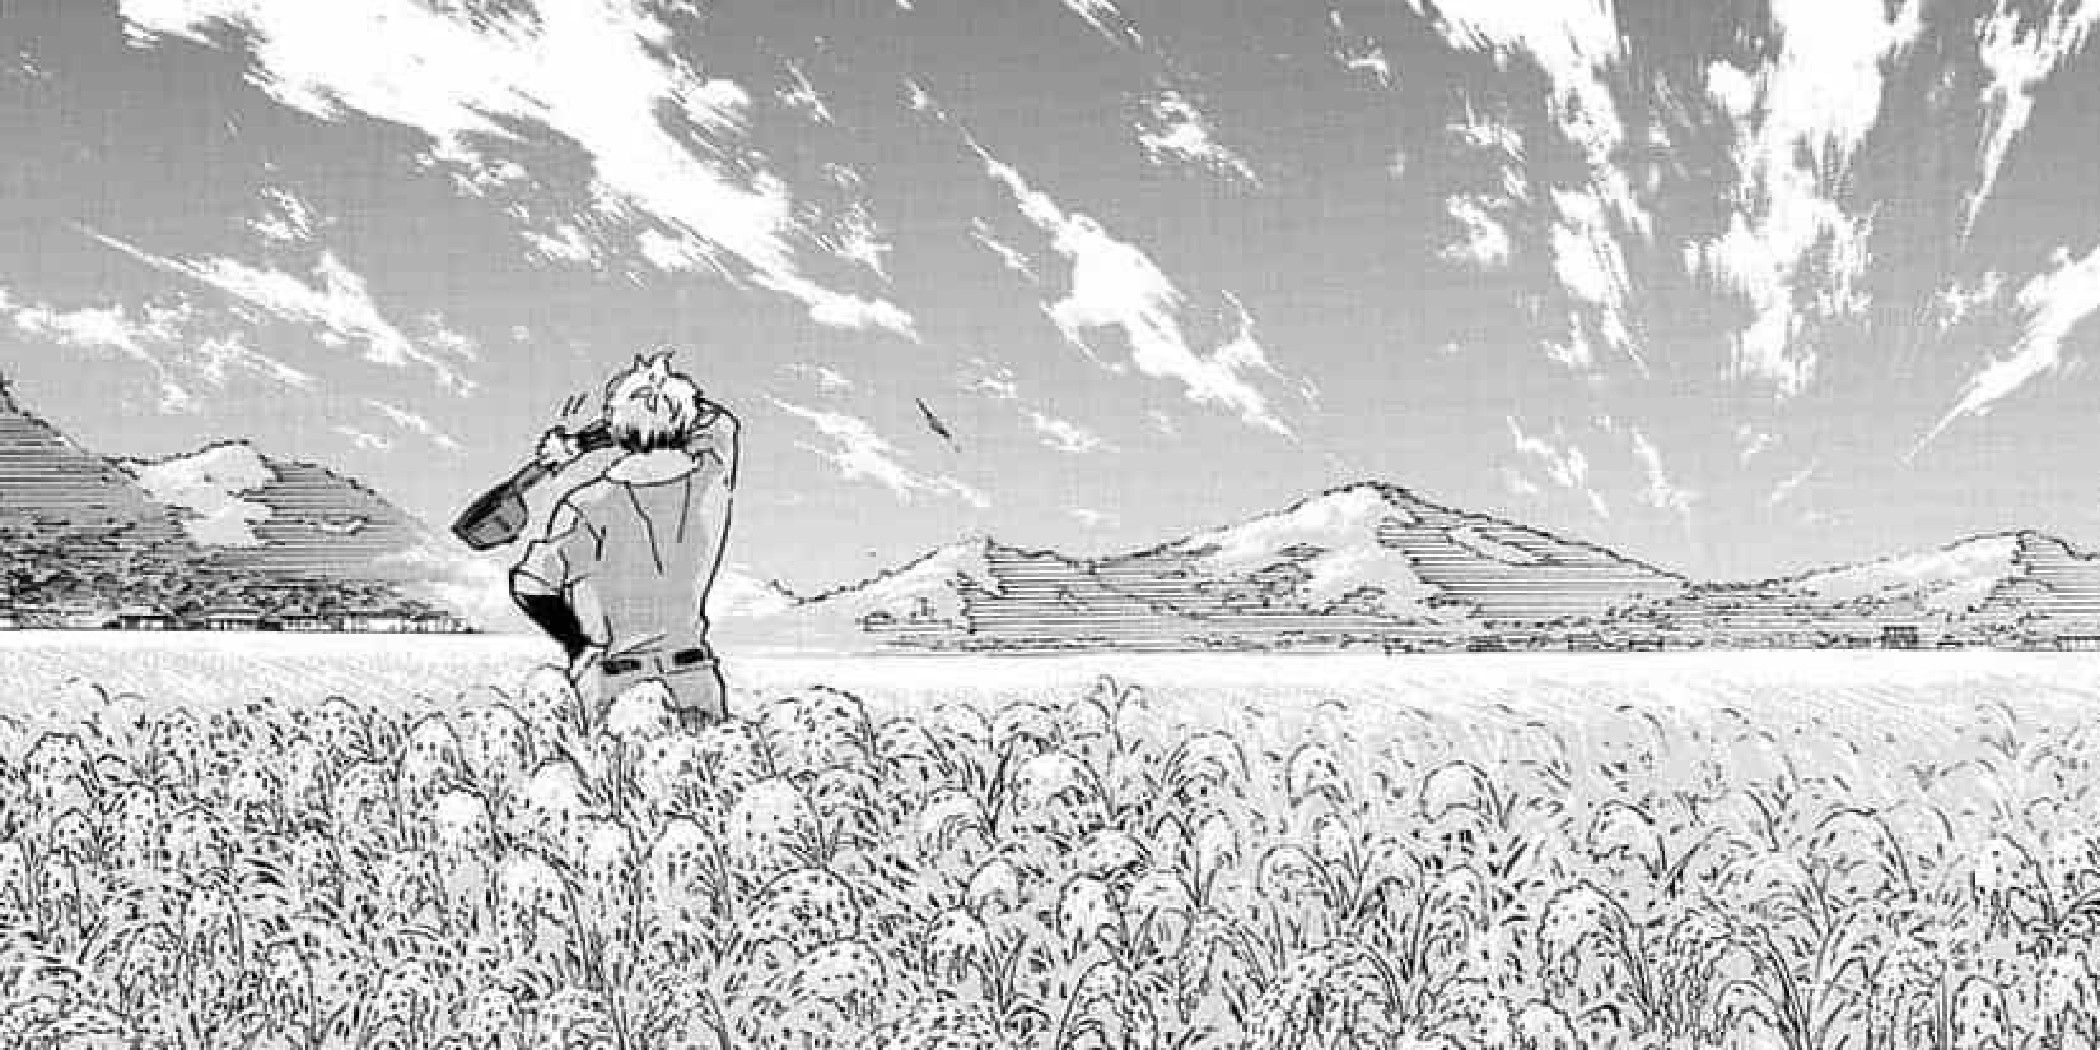 Vinland Saga manga panel of Thorfinn standing in a farm field, working the land.